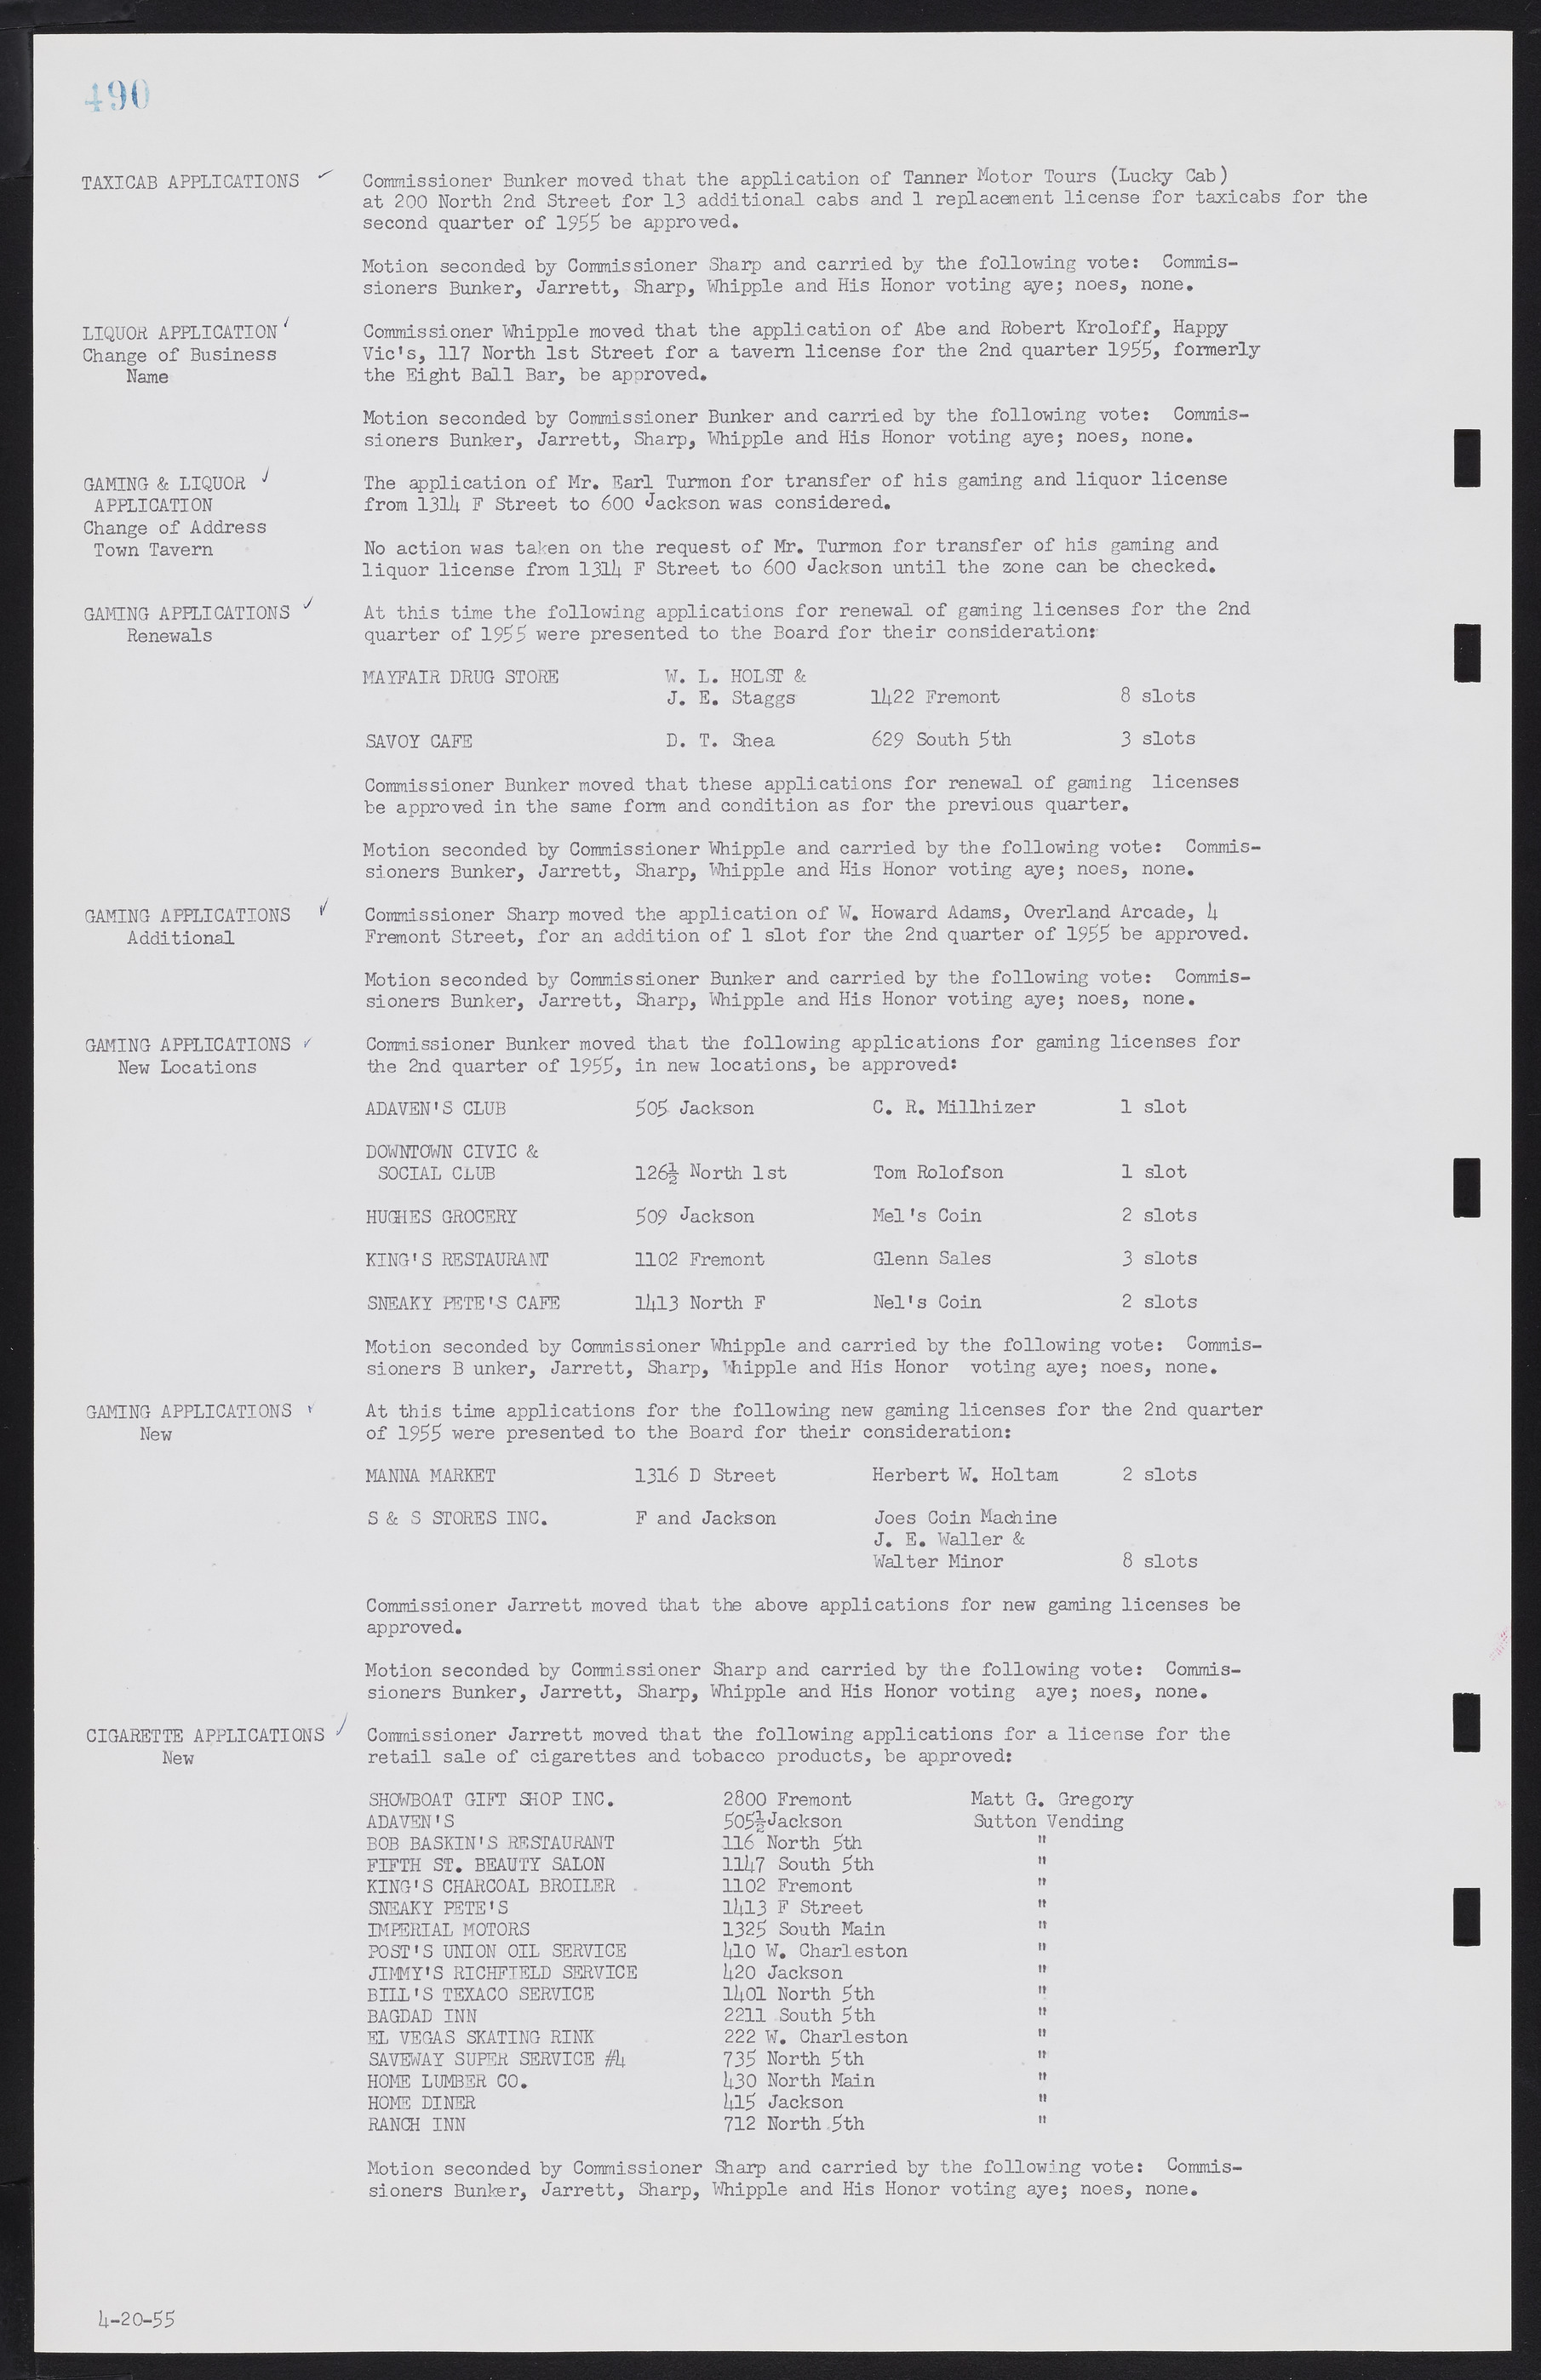 Las Vegas City Commission Minutes, February 17, 1954 to September 21, 1955, lvc000009-496